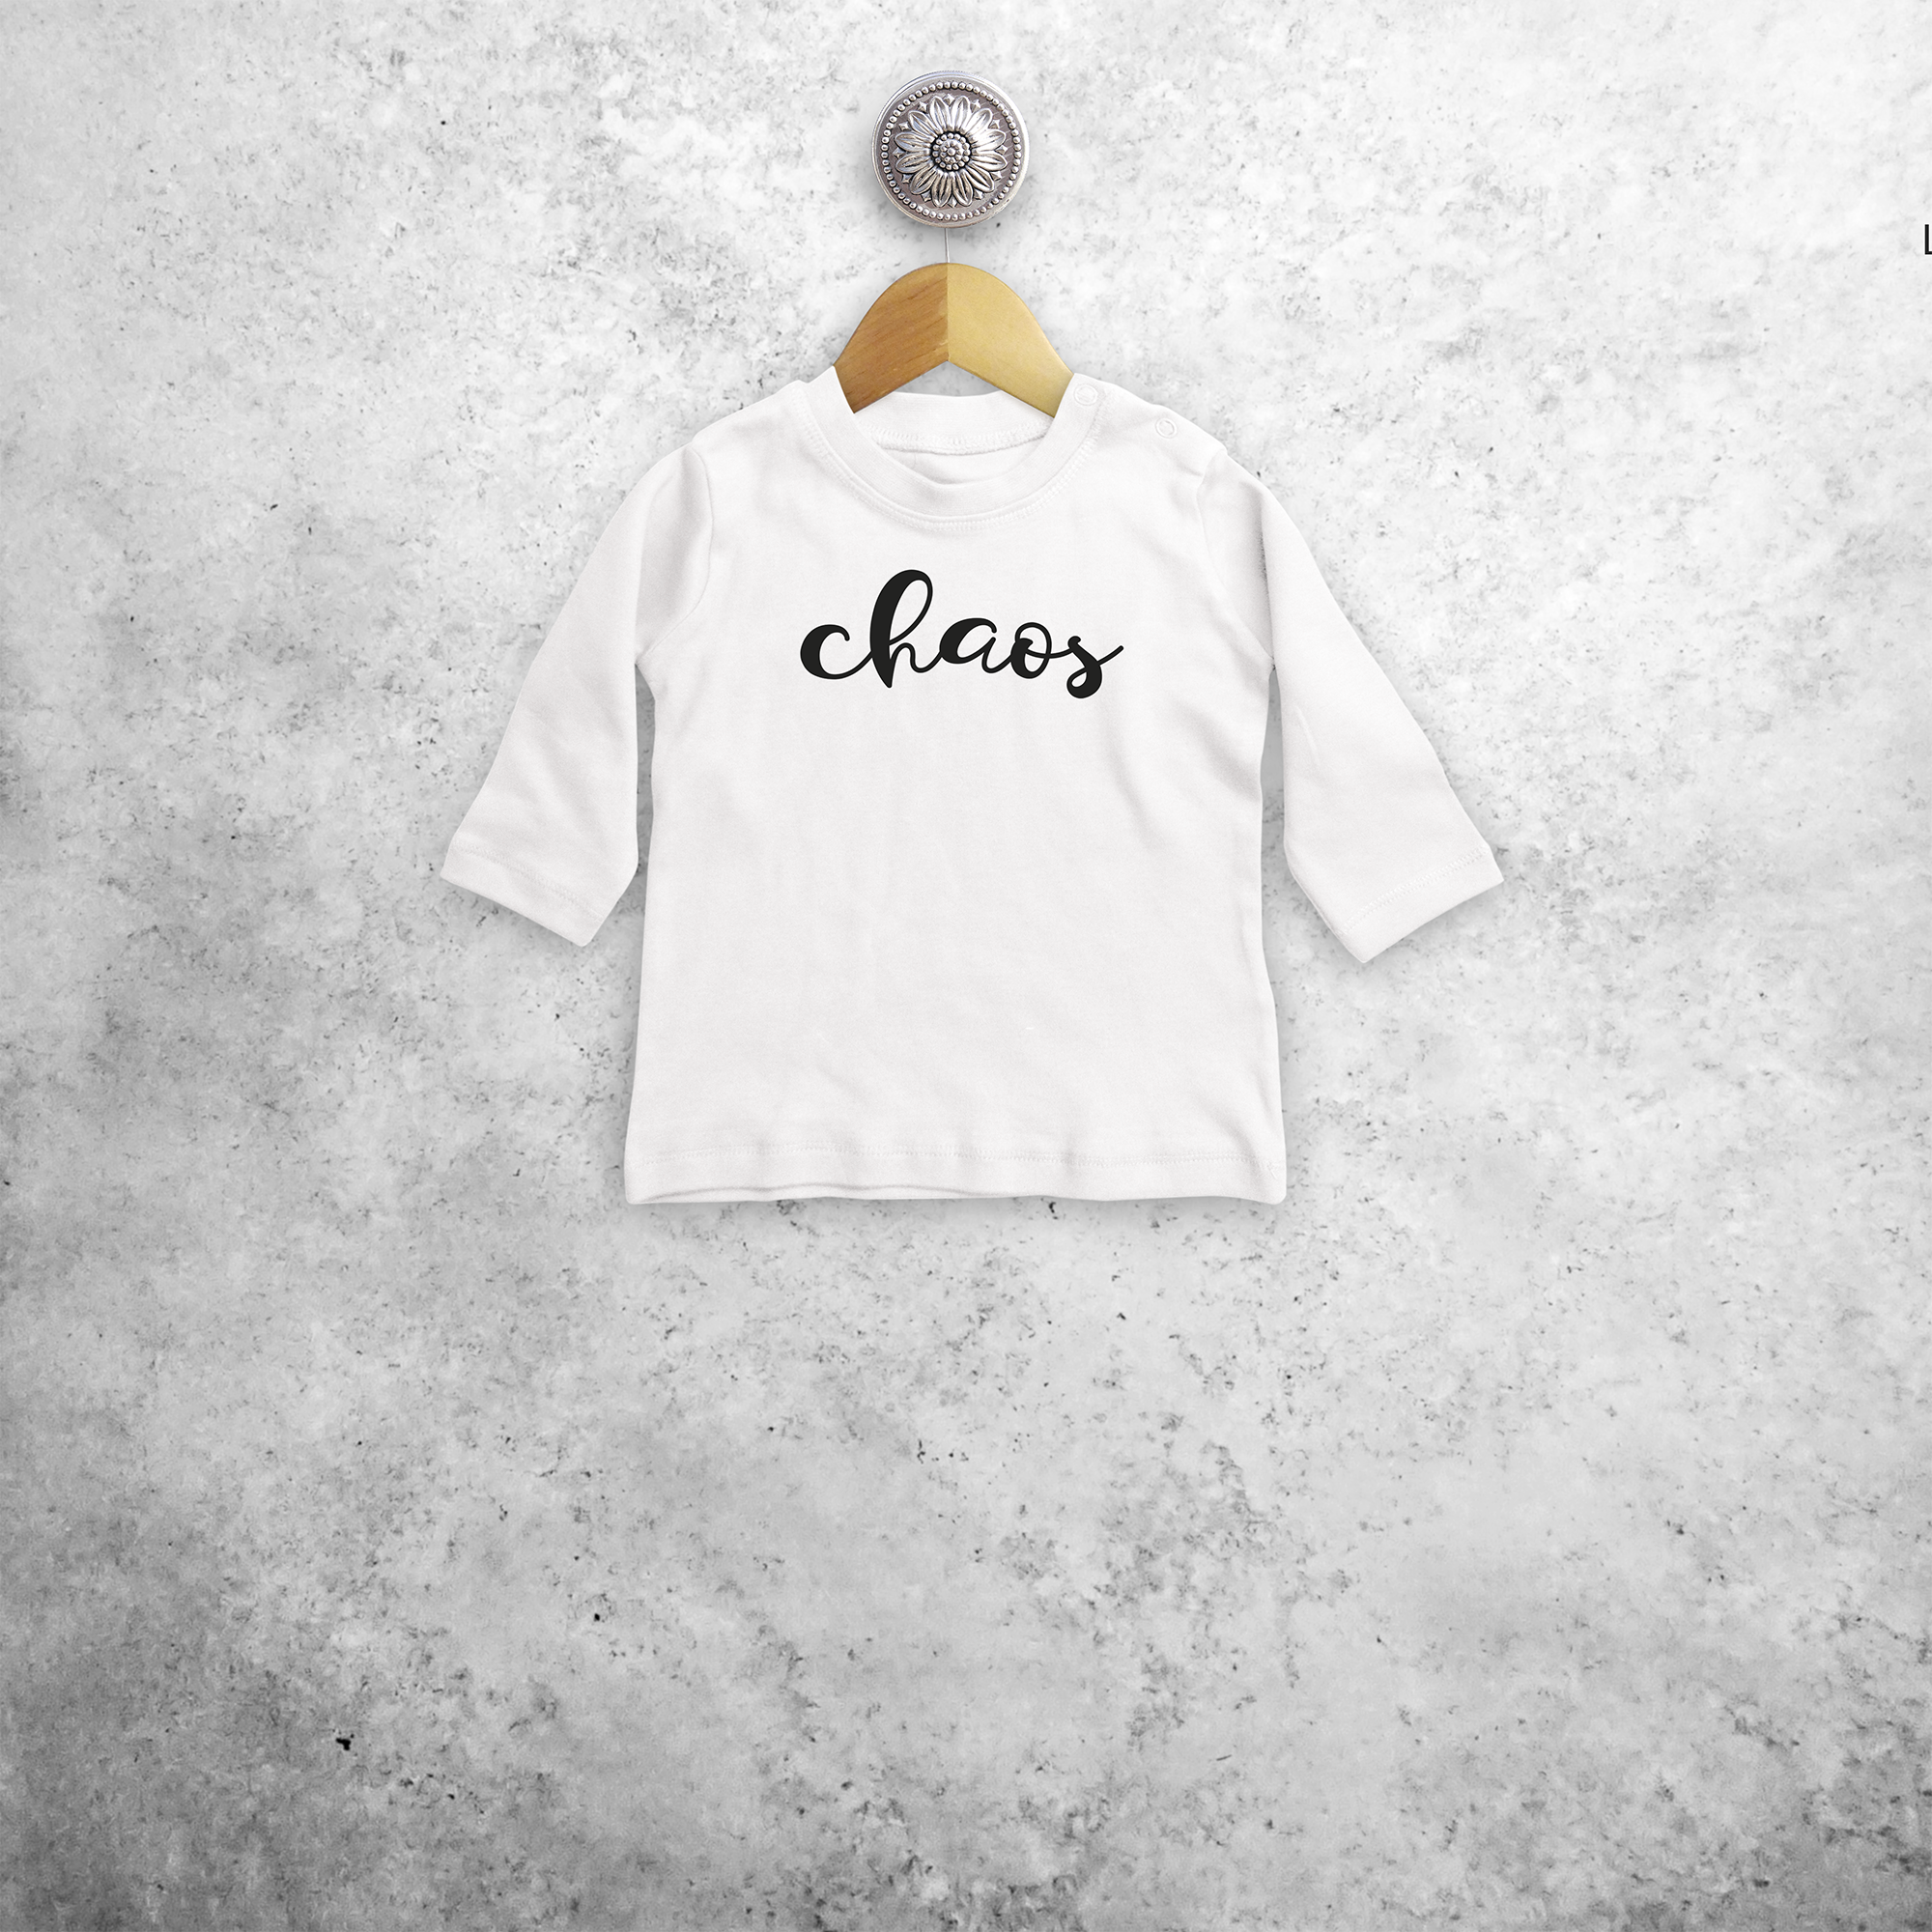 'Chaos' baby longsleeve shirt